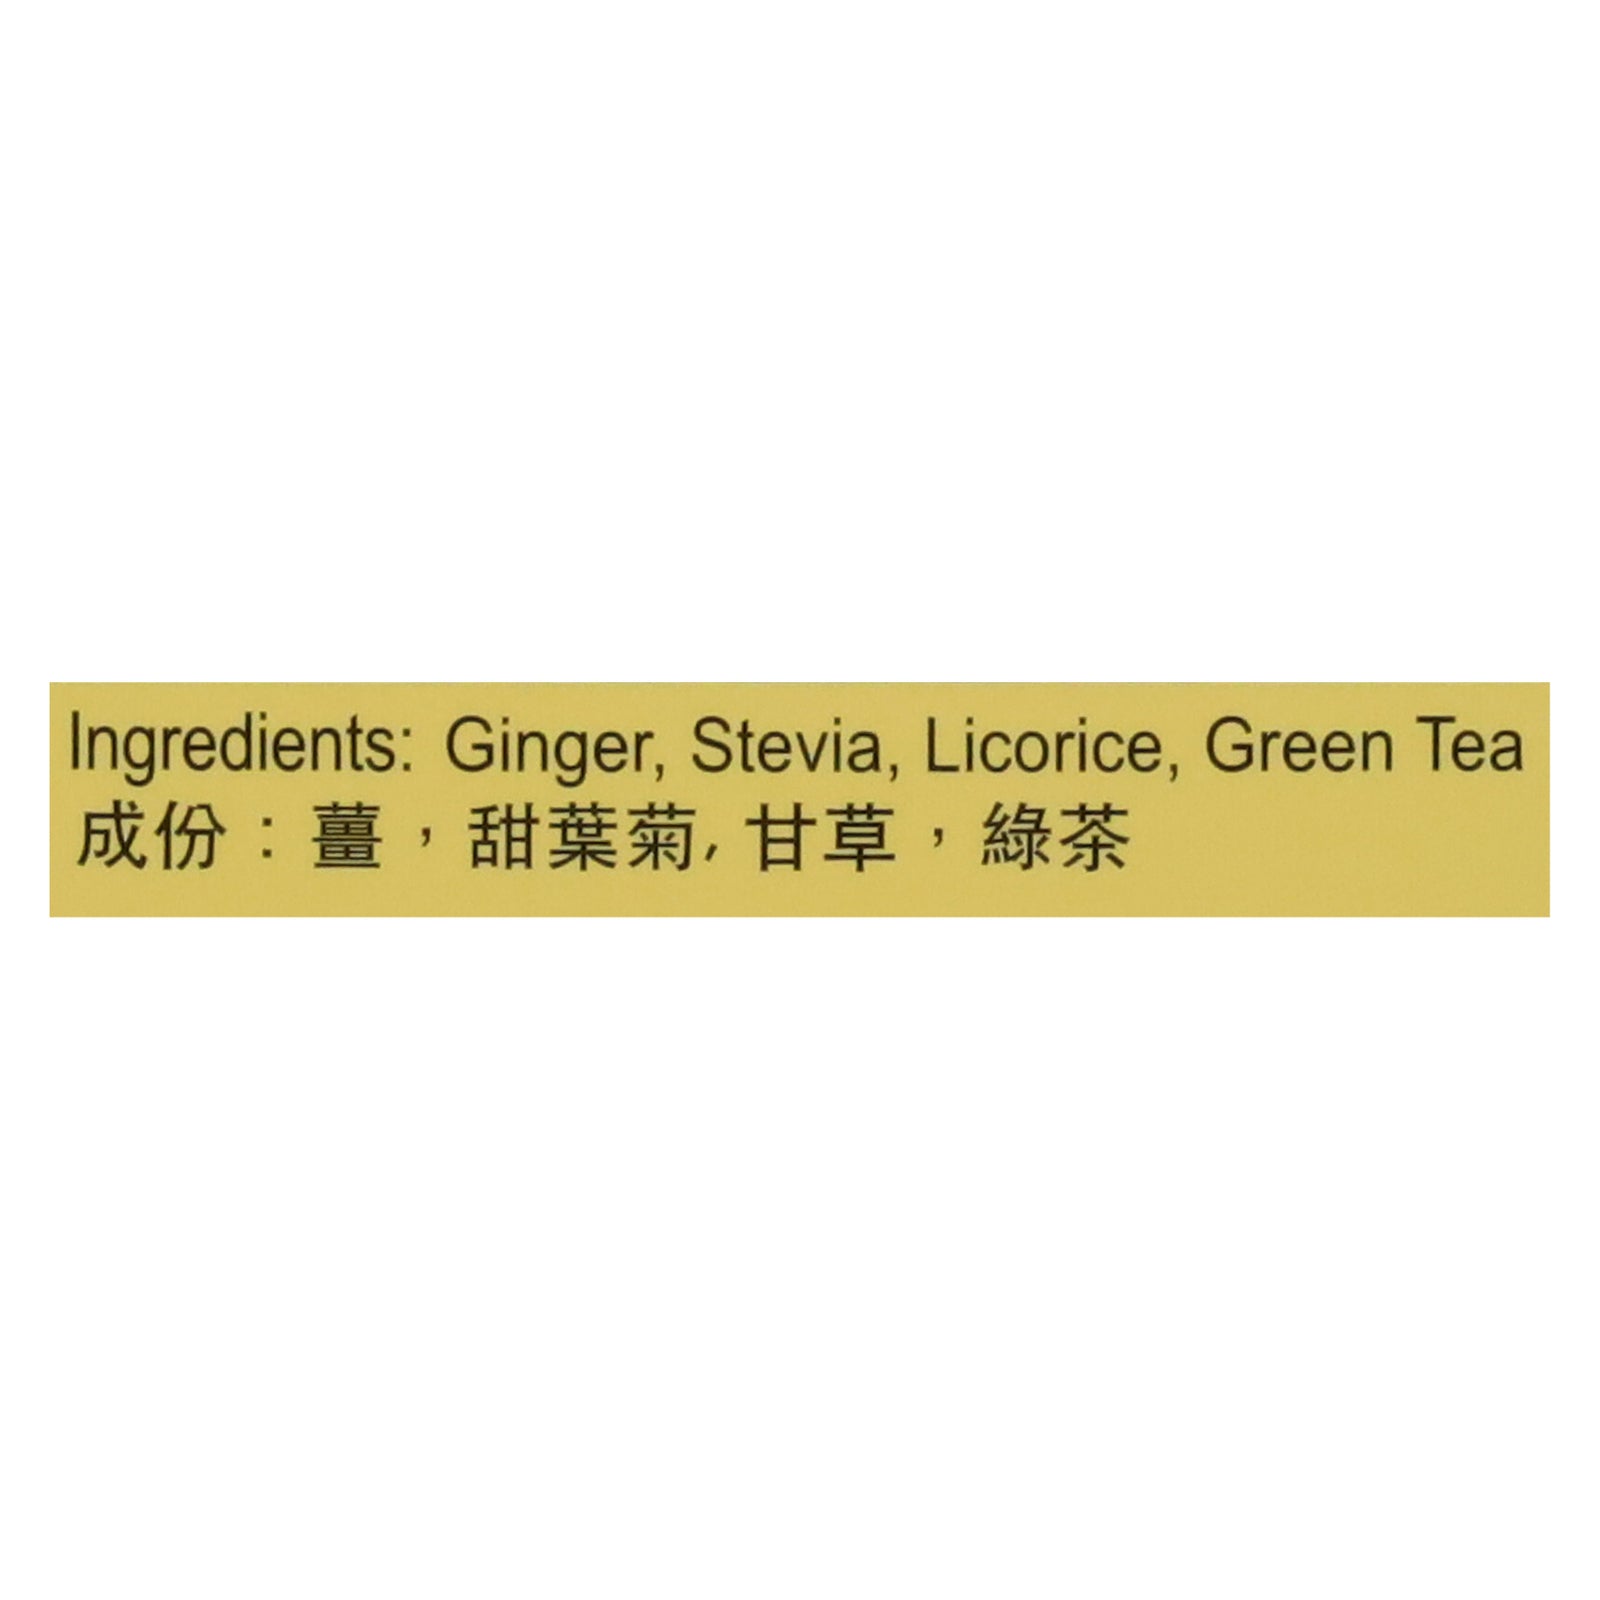 Prince Of Peace Ginger Green Tea - 16 Tea Bags